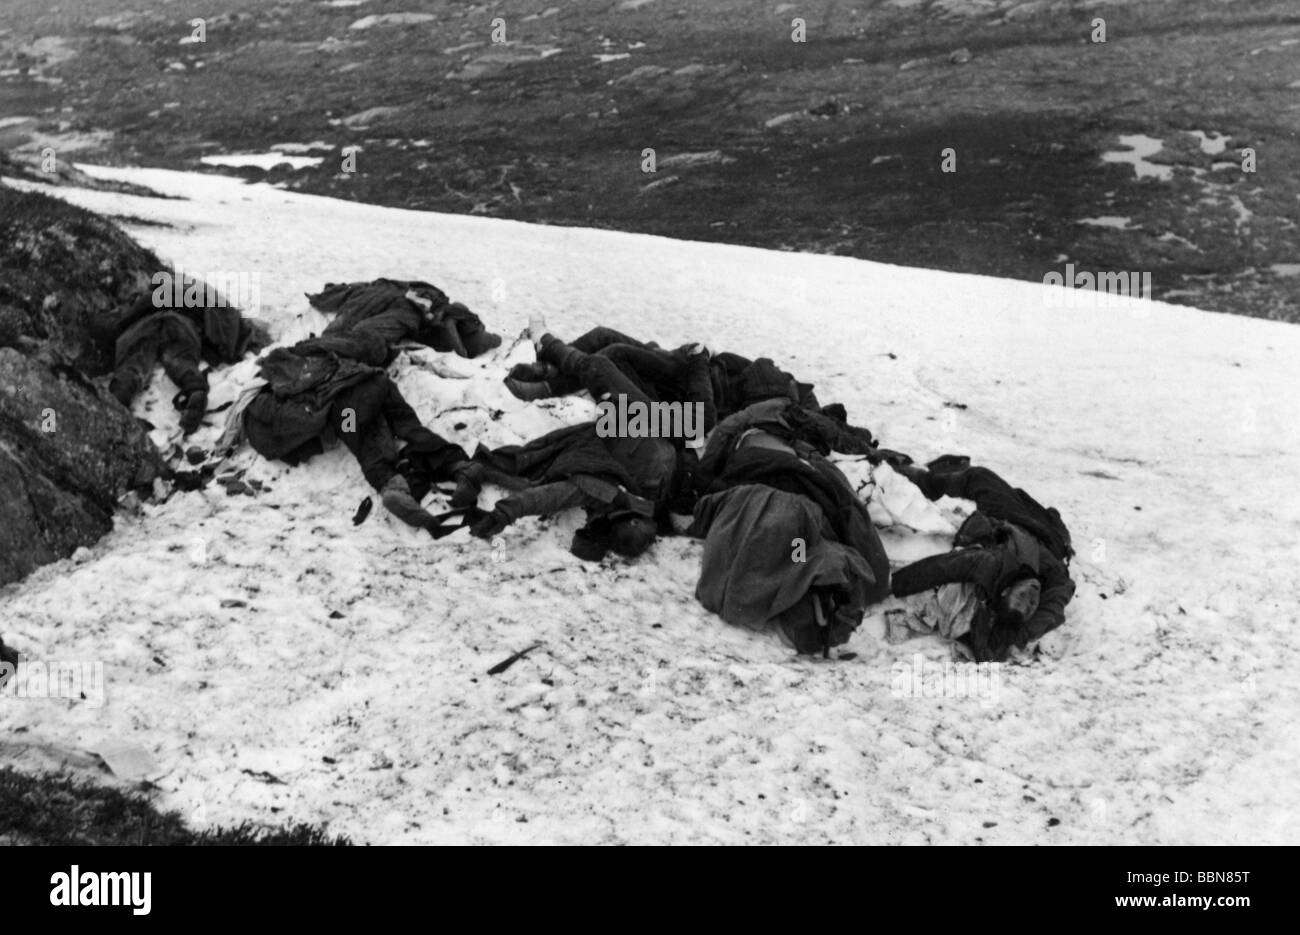 events, Second World War / WWII, Russia, fallen soldiers / dead bodies, fallen Soviet soldiers, circa 1942, Stock Photo